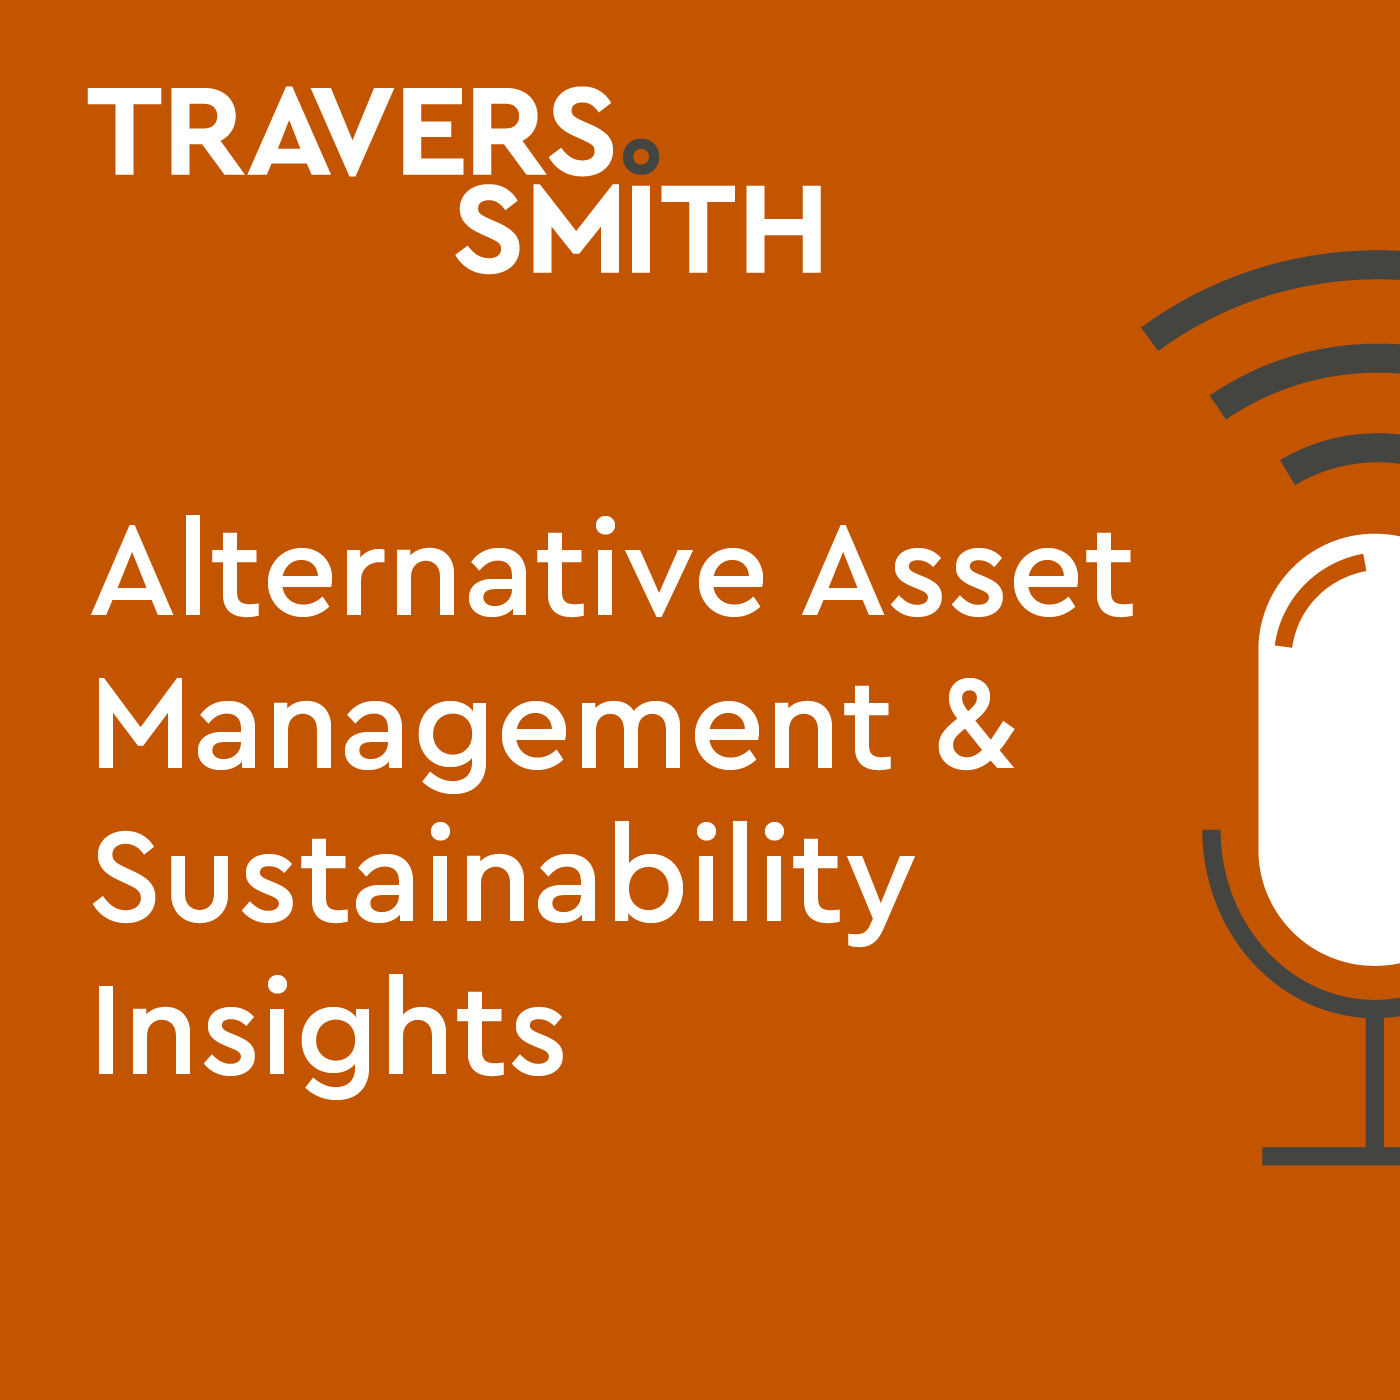 Artwork for Alternative Asset Management & Sustainability Insights